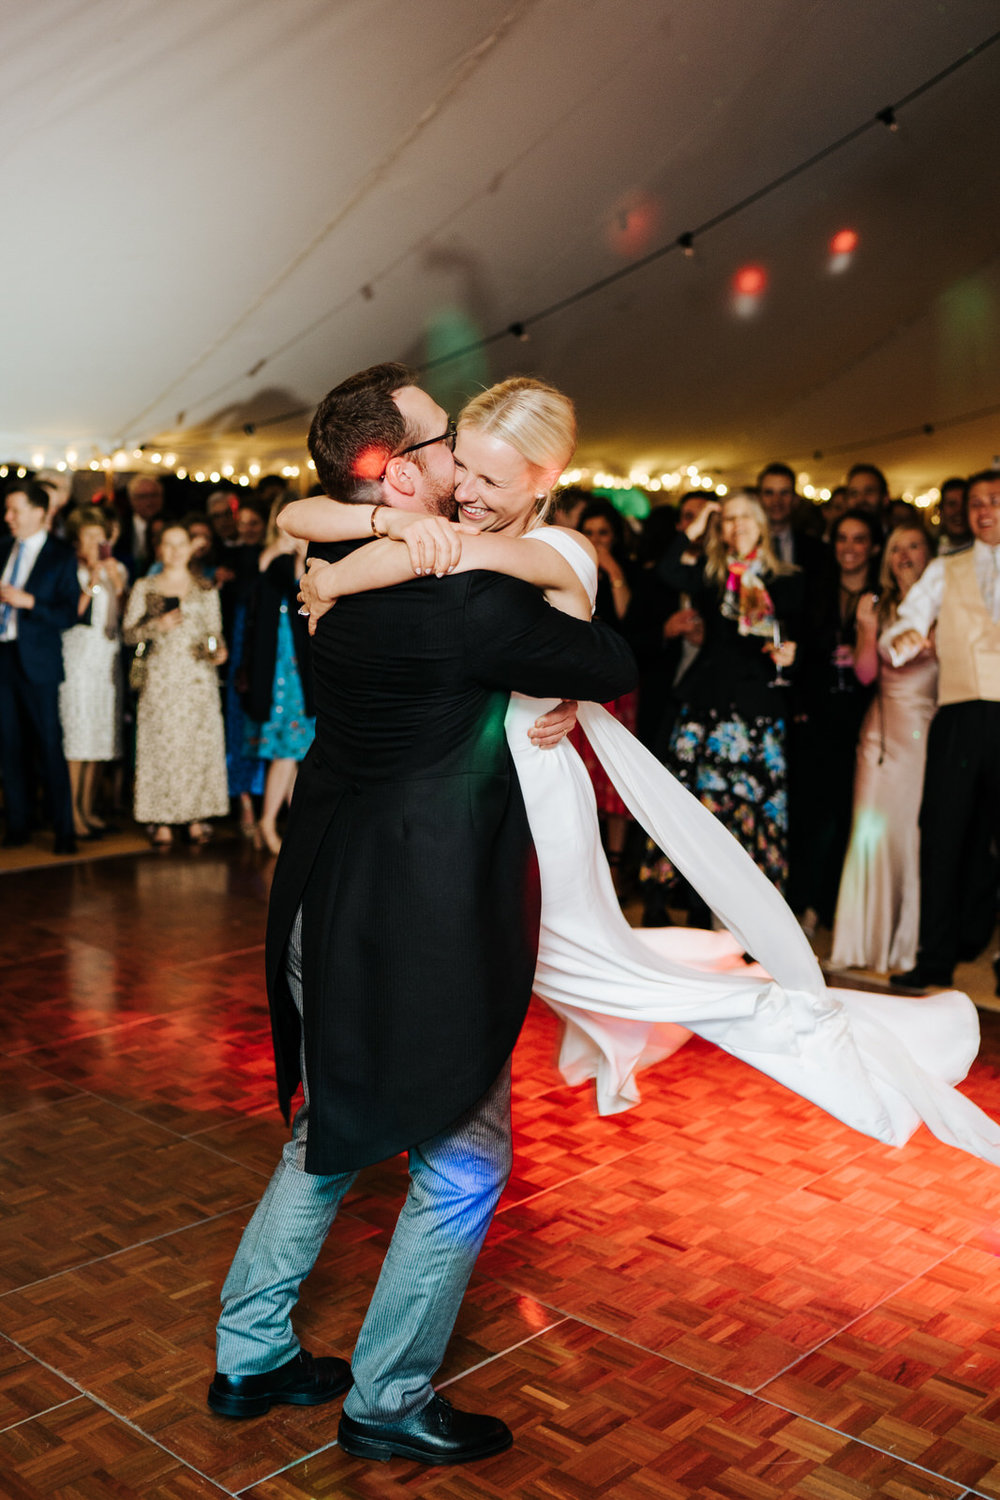  Grooom picks up bride during first dance 